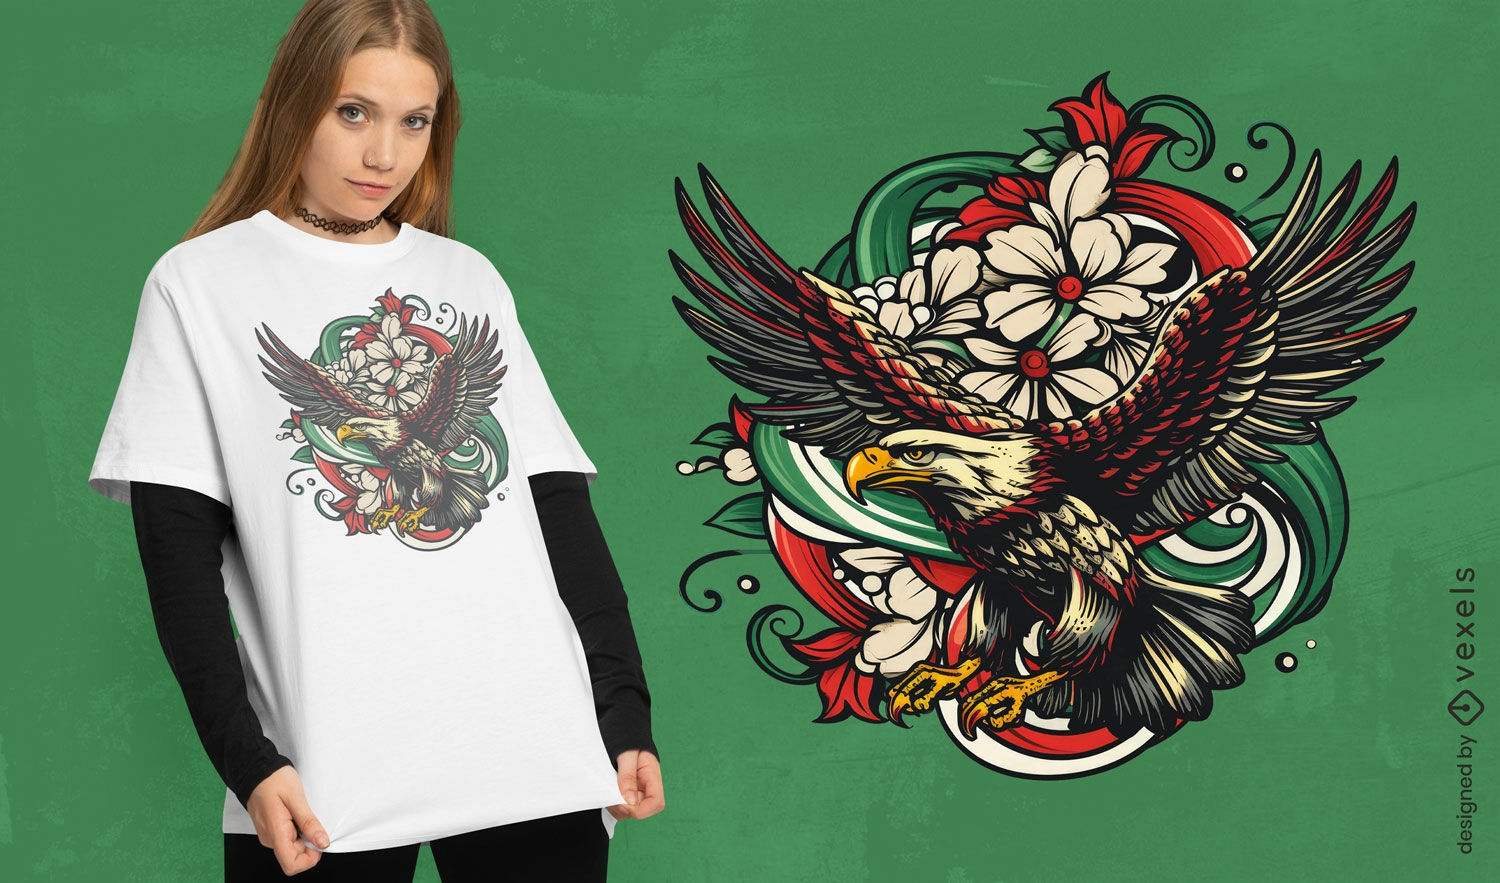 Italienisches Adler-T-Shirt-Design